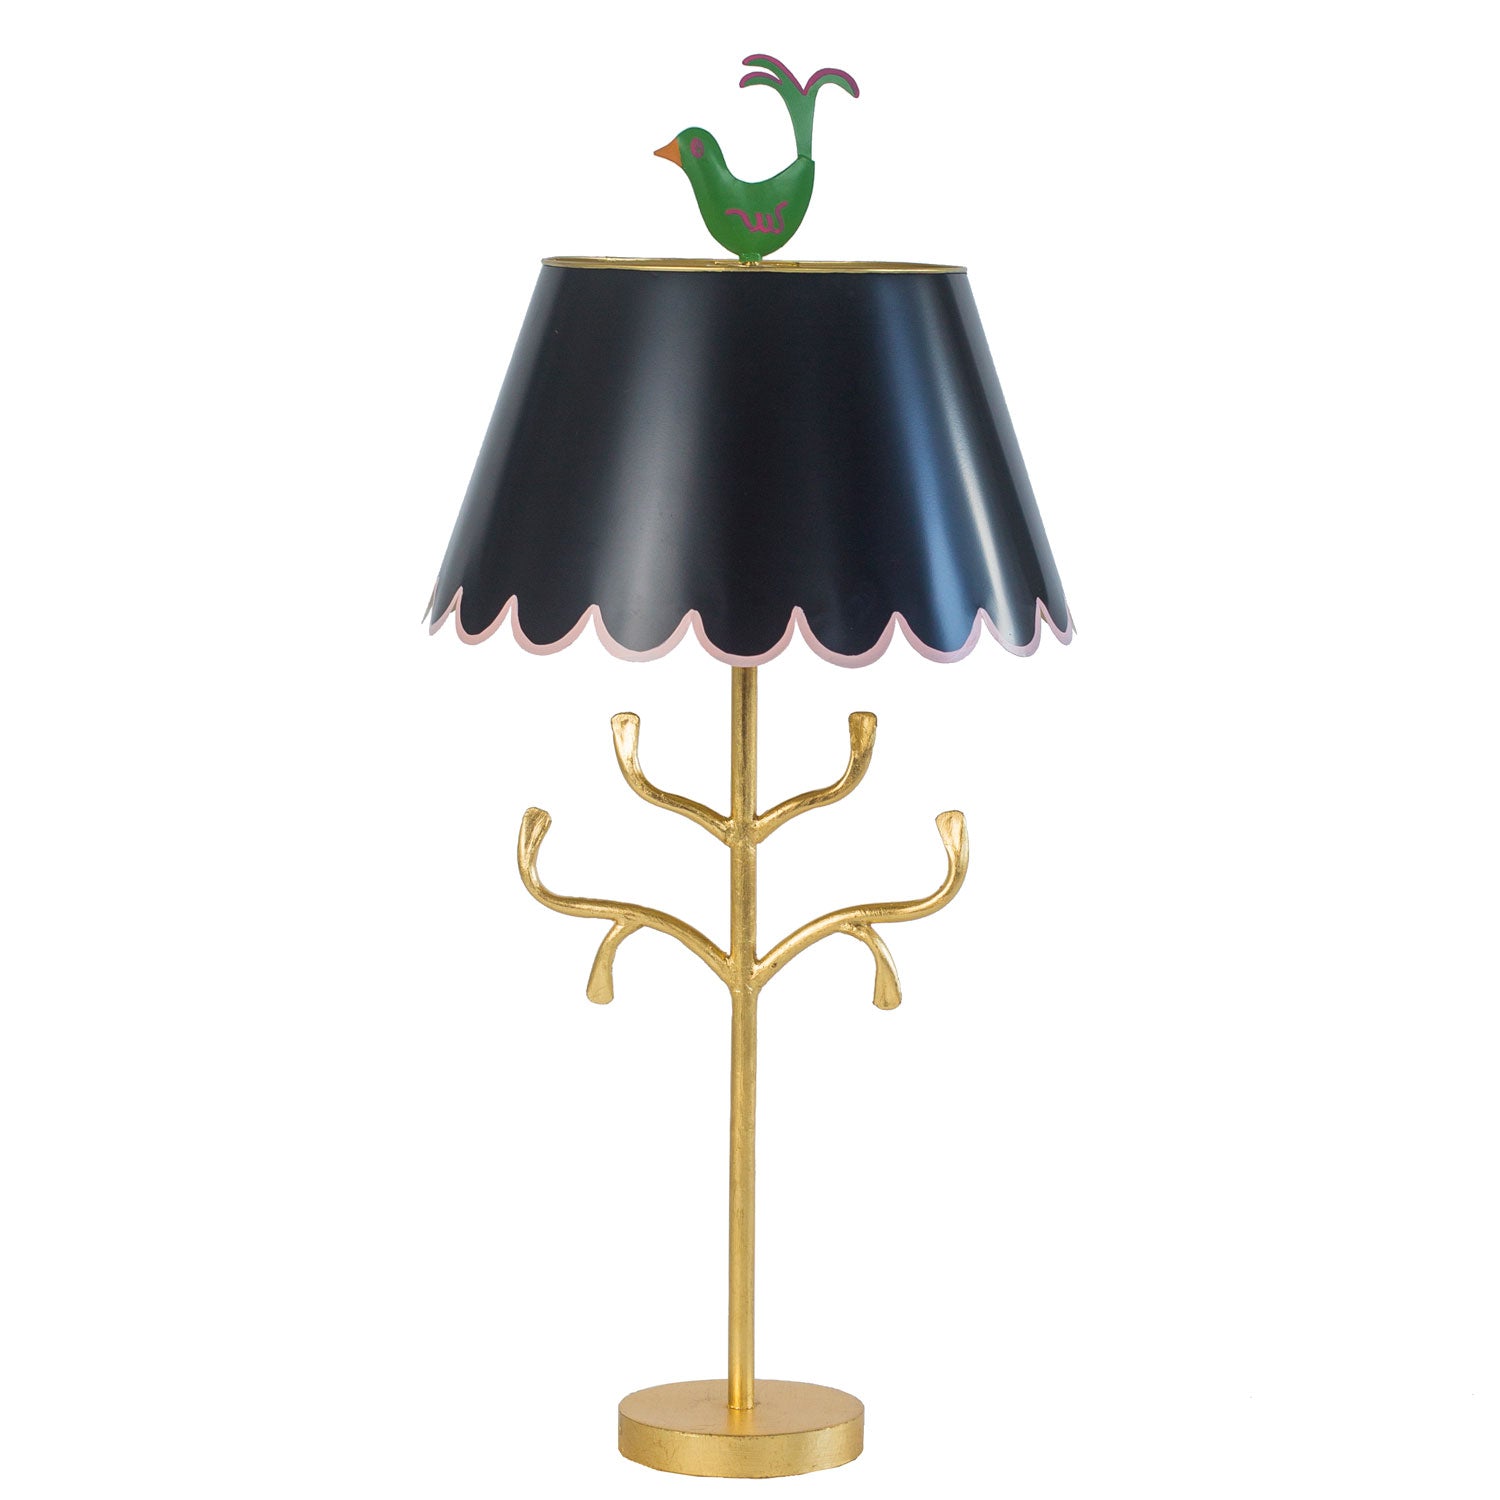 Black Mrs English lamp with green bird finial, scallop shade, Stray Dog